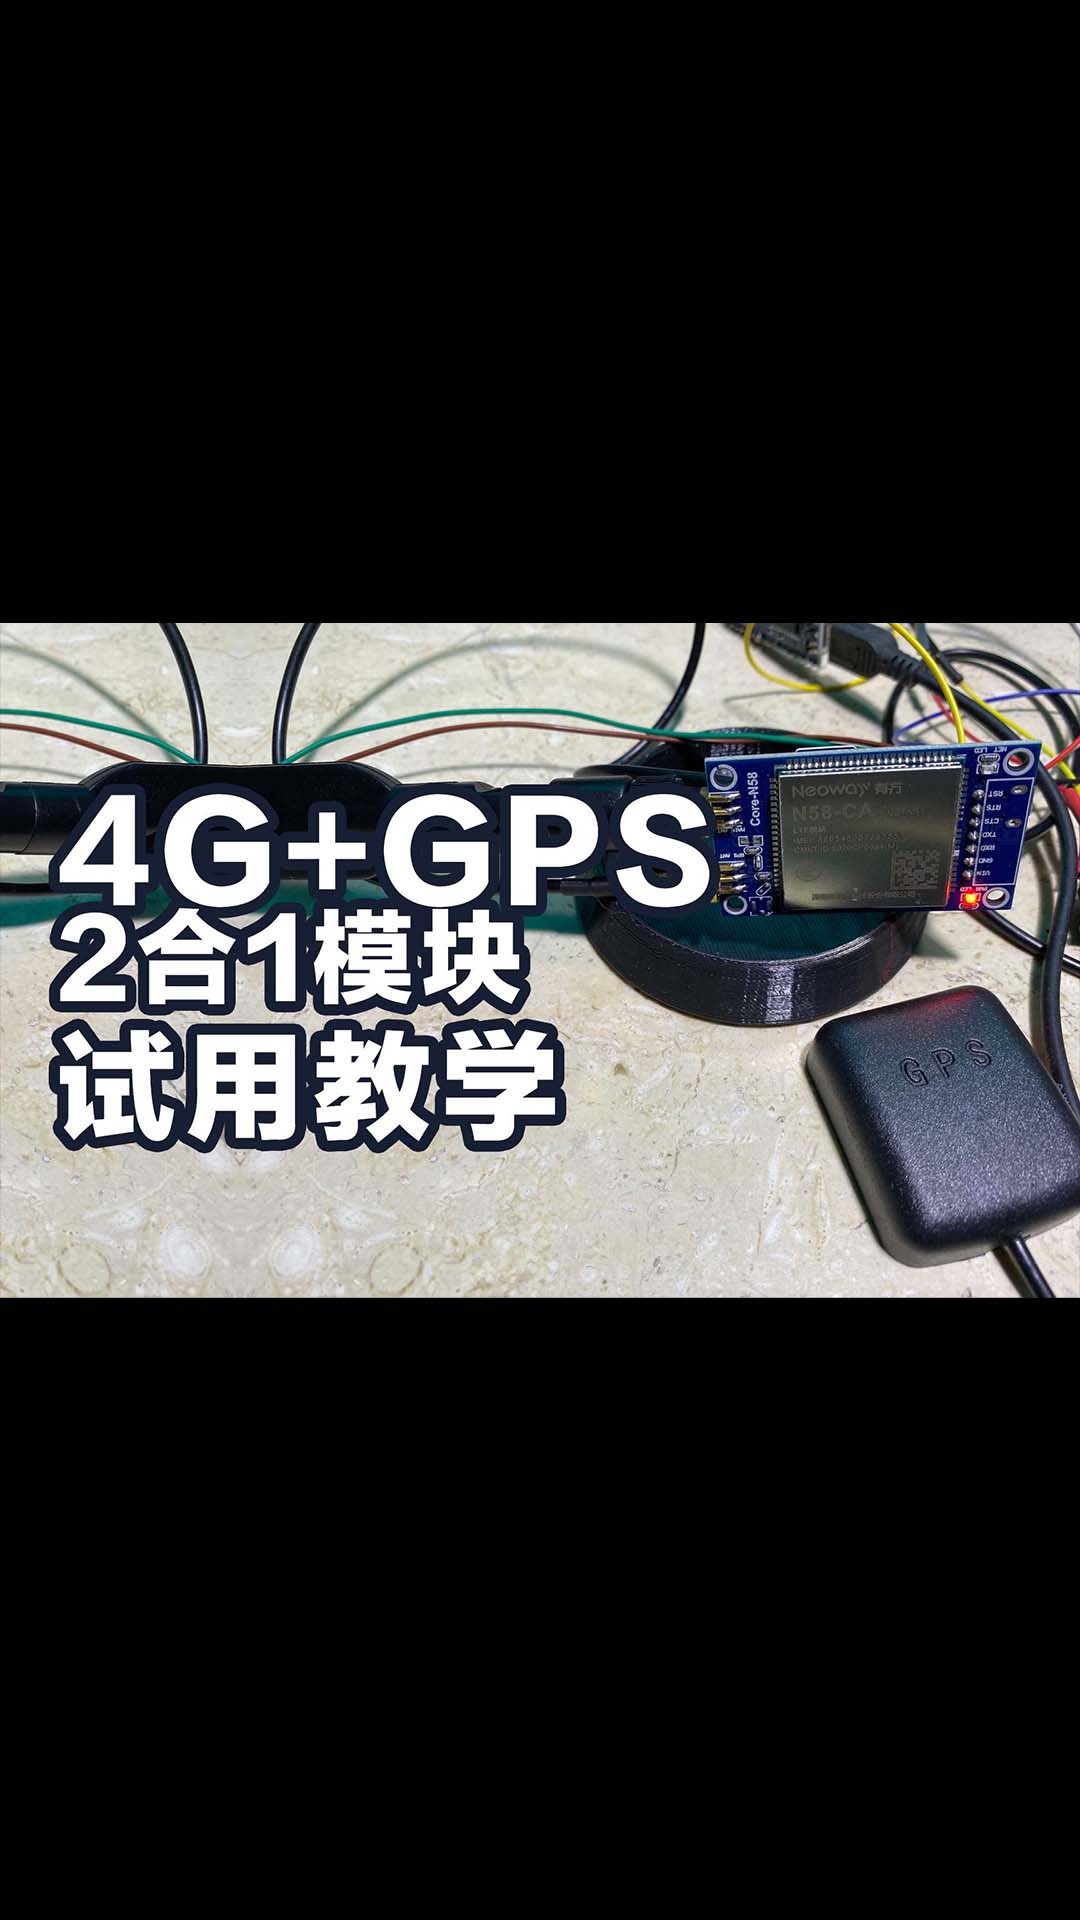 arduino DIY汽车监控 4G+GPS 2合1模块 试用和AT命令教学 有方 n58-ca